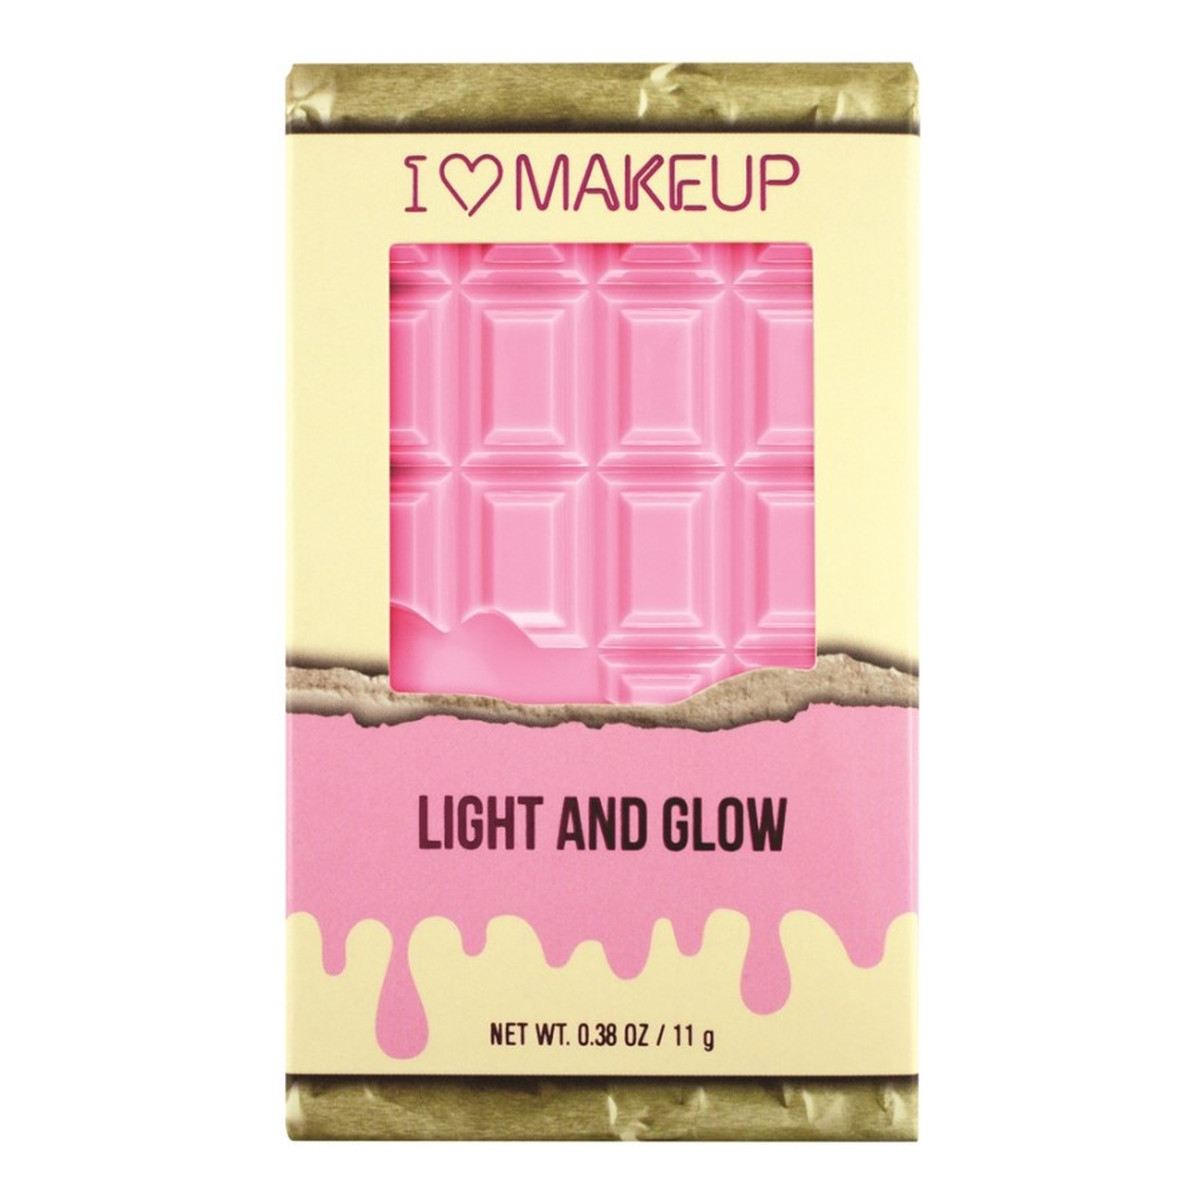 Makeup Revolution I Heart Make Up Light & Glow paletka do konturowania twarzy 1 sztuka 11g